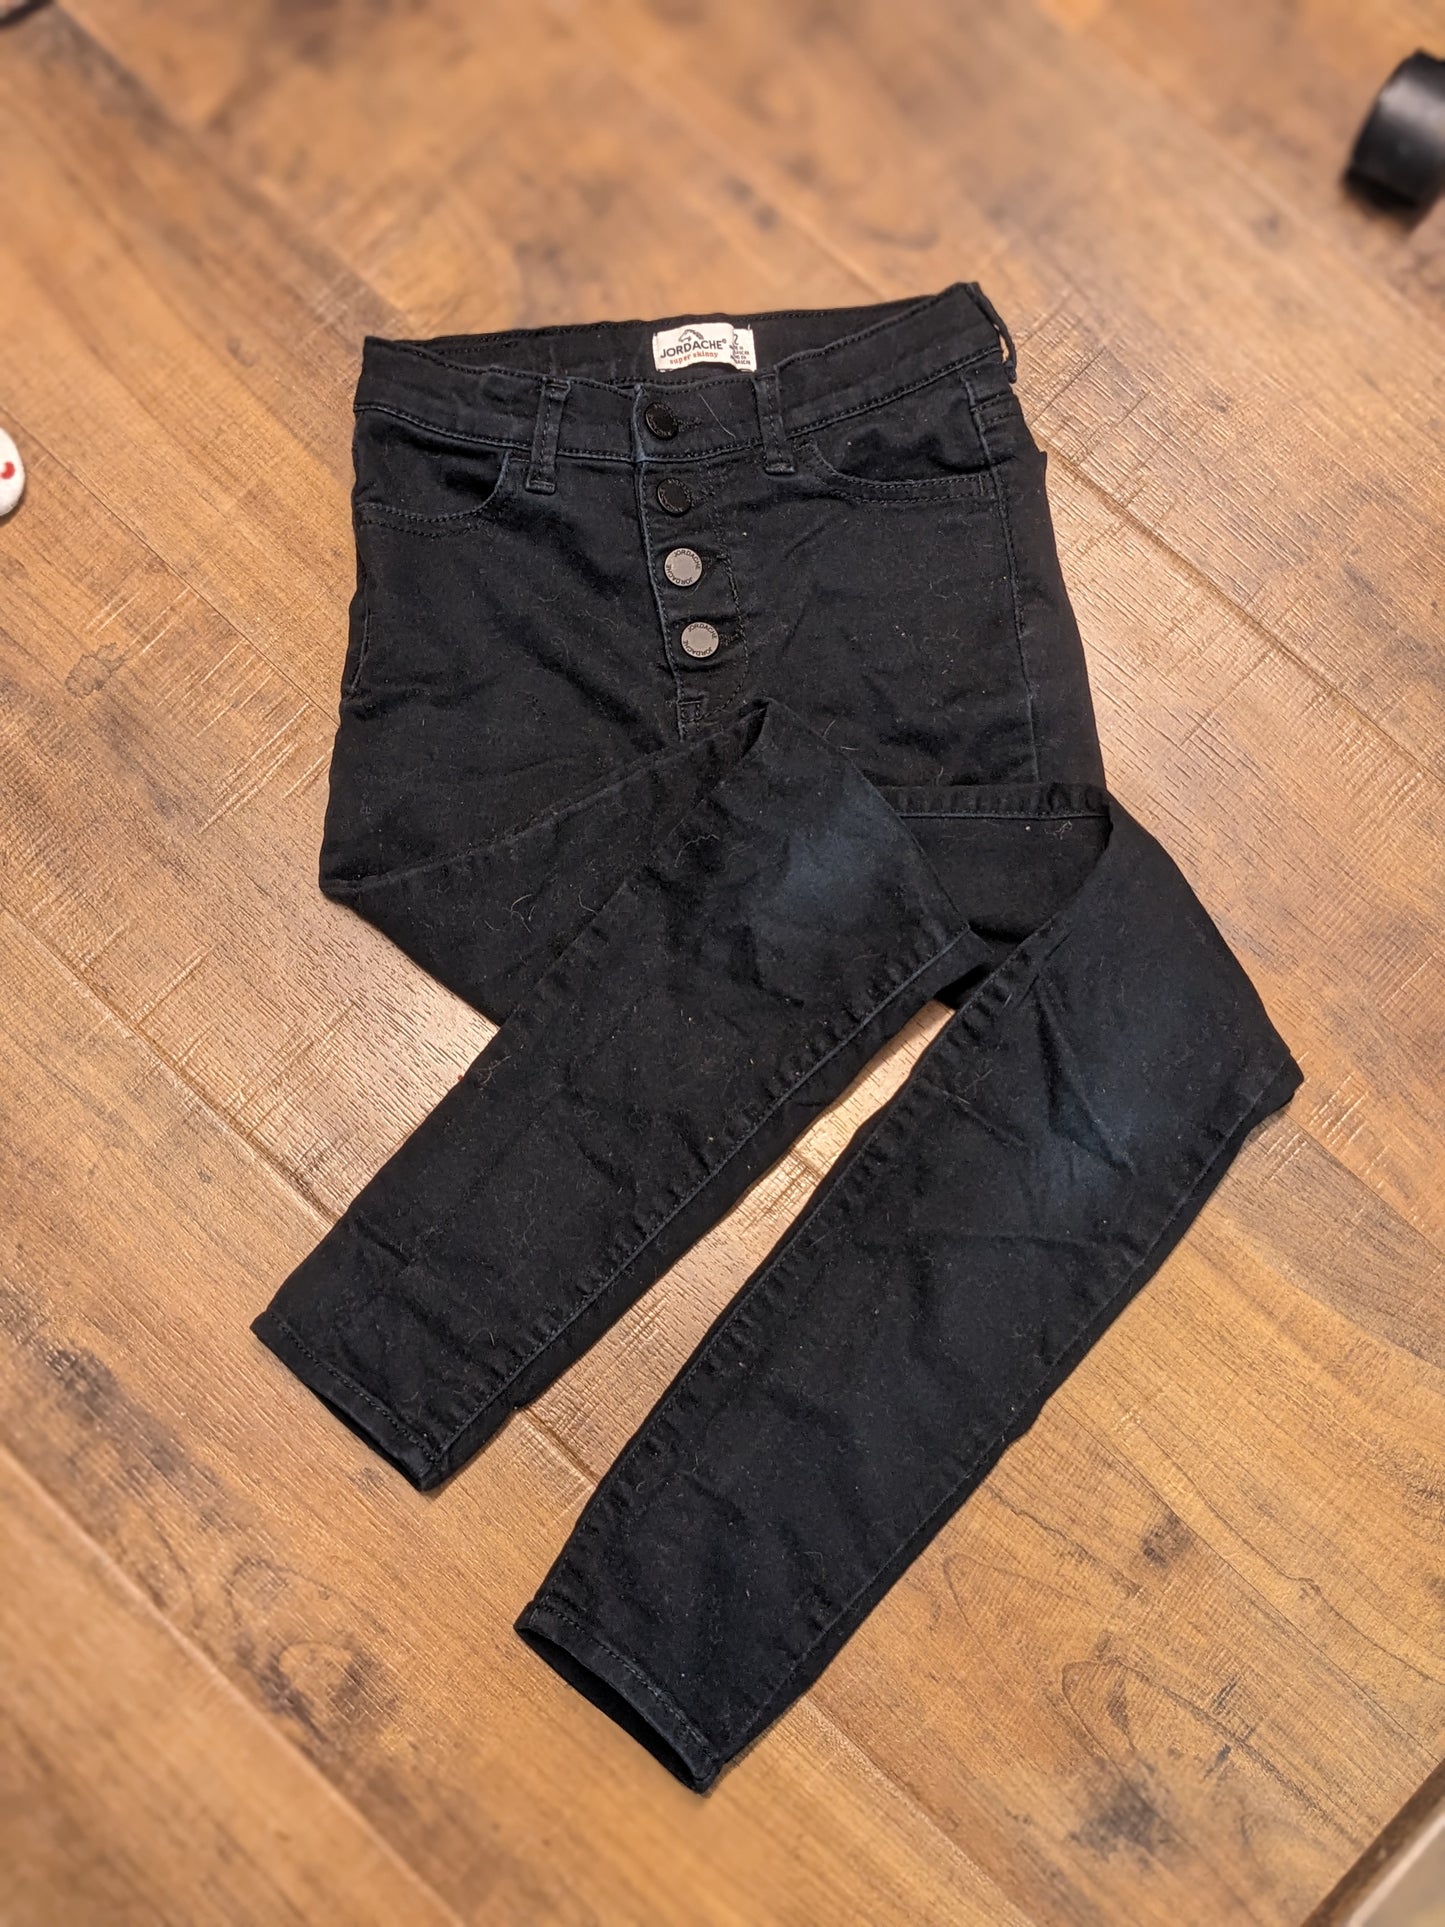 Jordache black high waisted jeans size 12